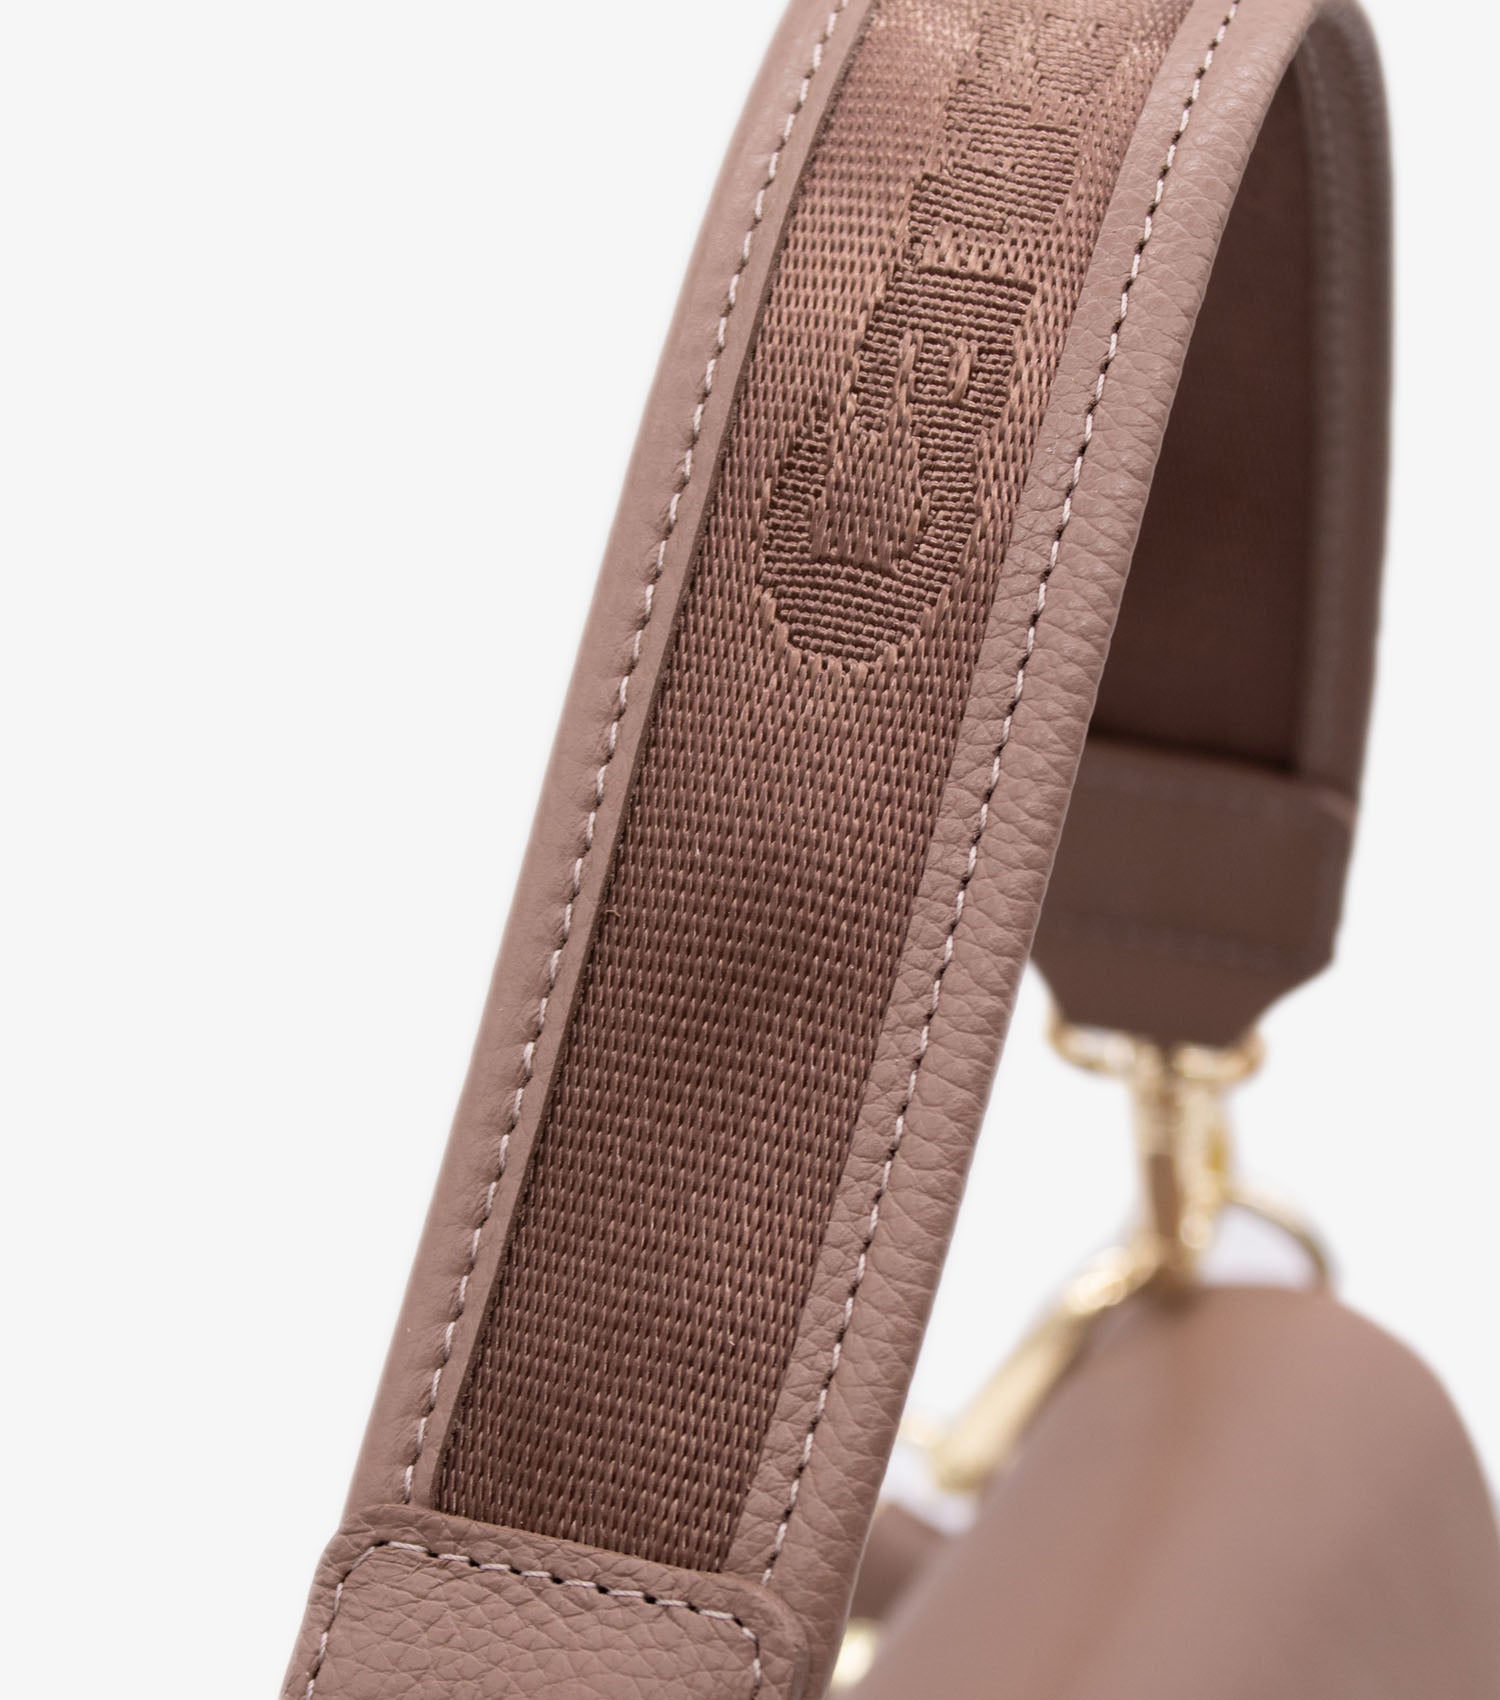 Cavalinho Muse 3 in 1: Leather Clutch, Handbag or Crossbody Bag - Sand - 18300509.07_P04